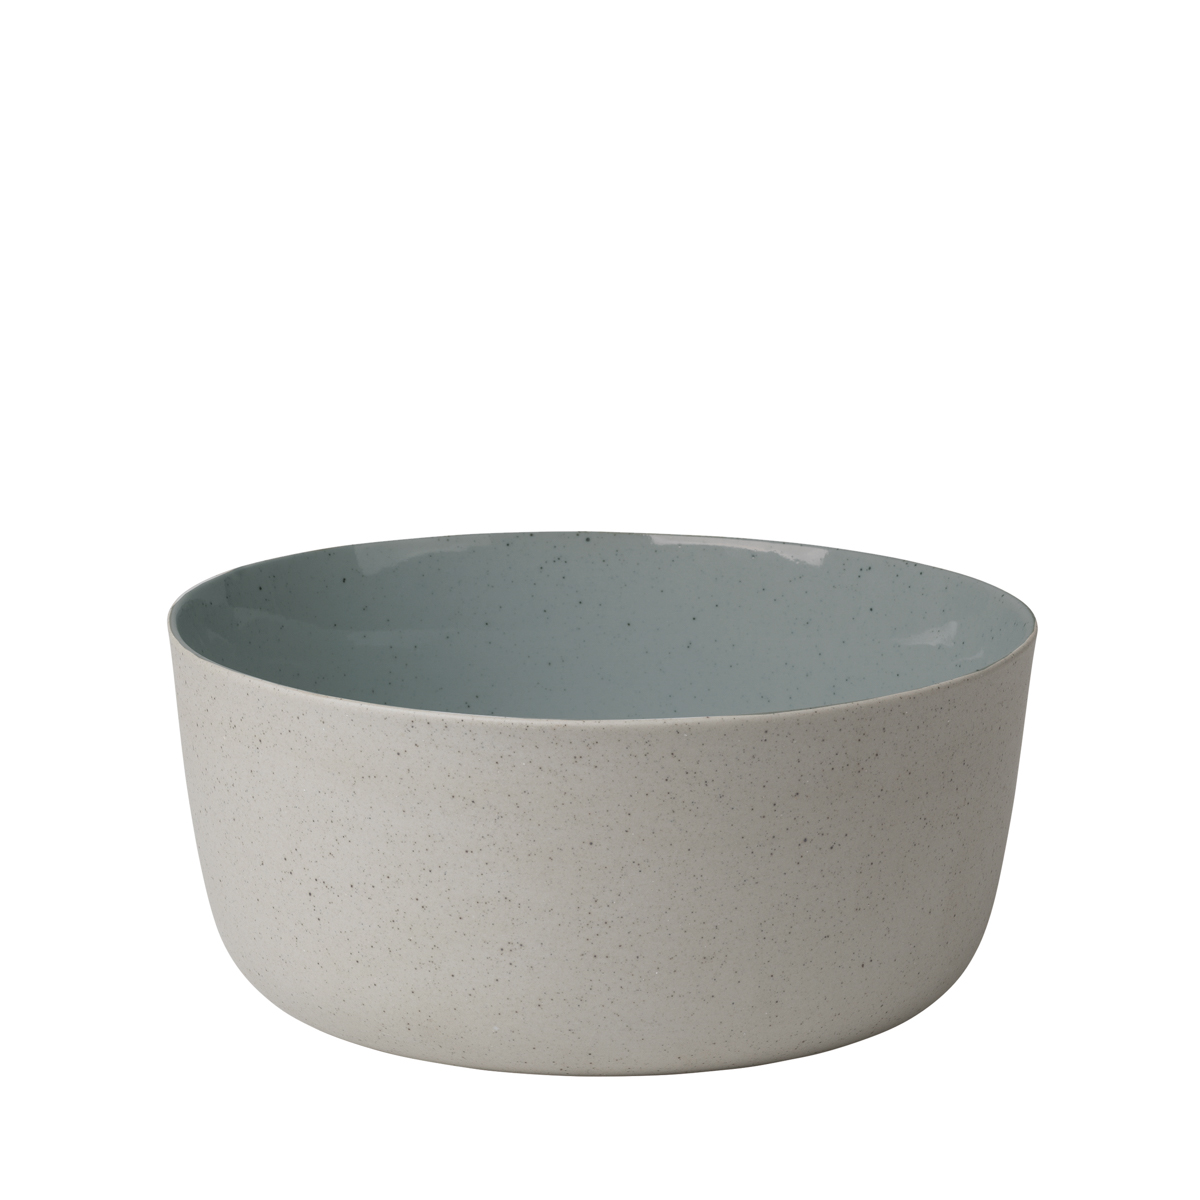 Schale -SABLO- Stone Size L, Ø 20 cm. Material: Keramik. Von Blomus.